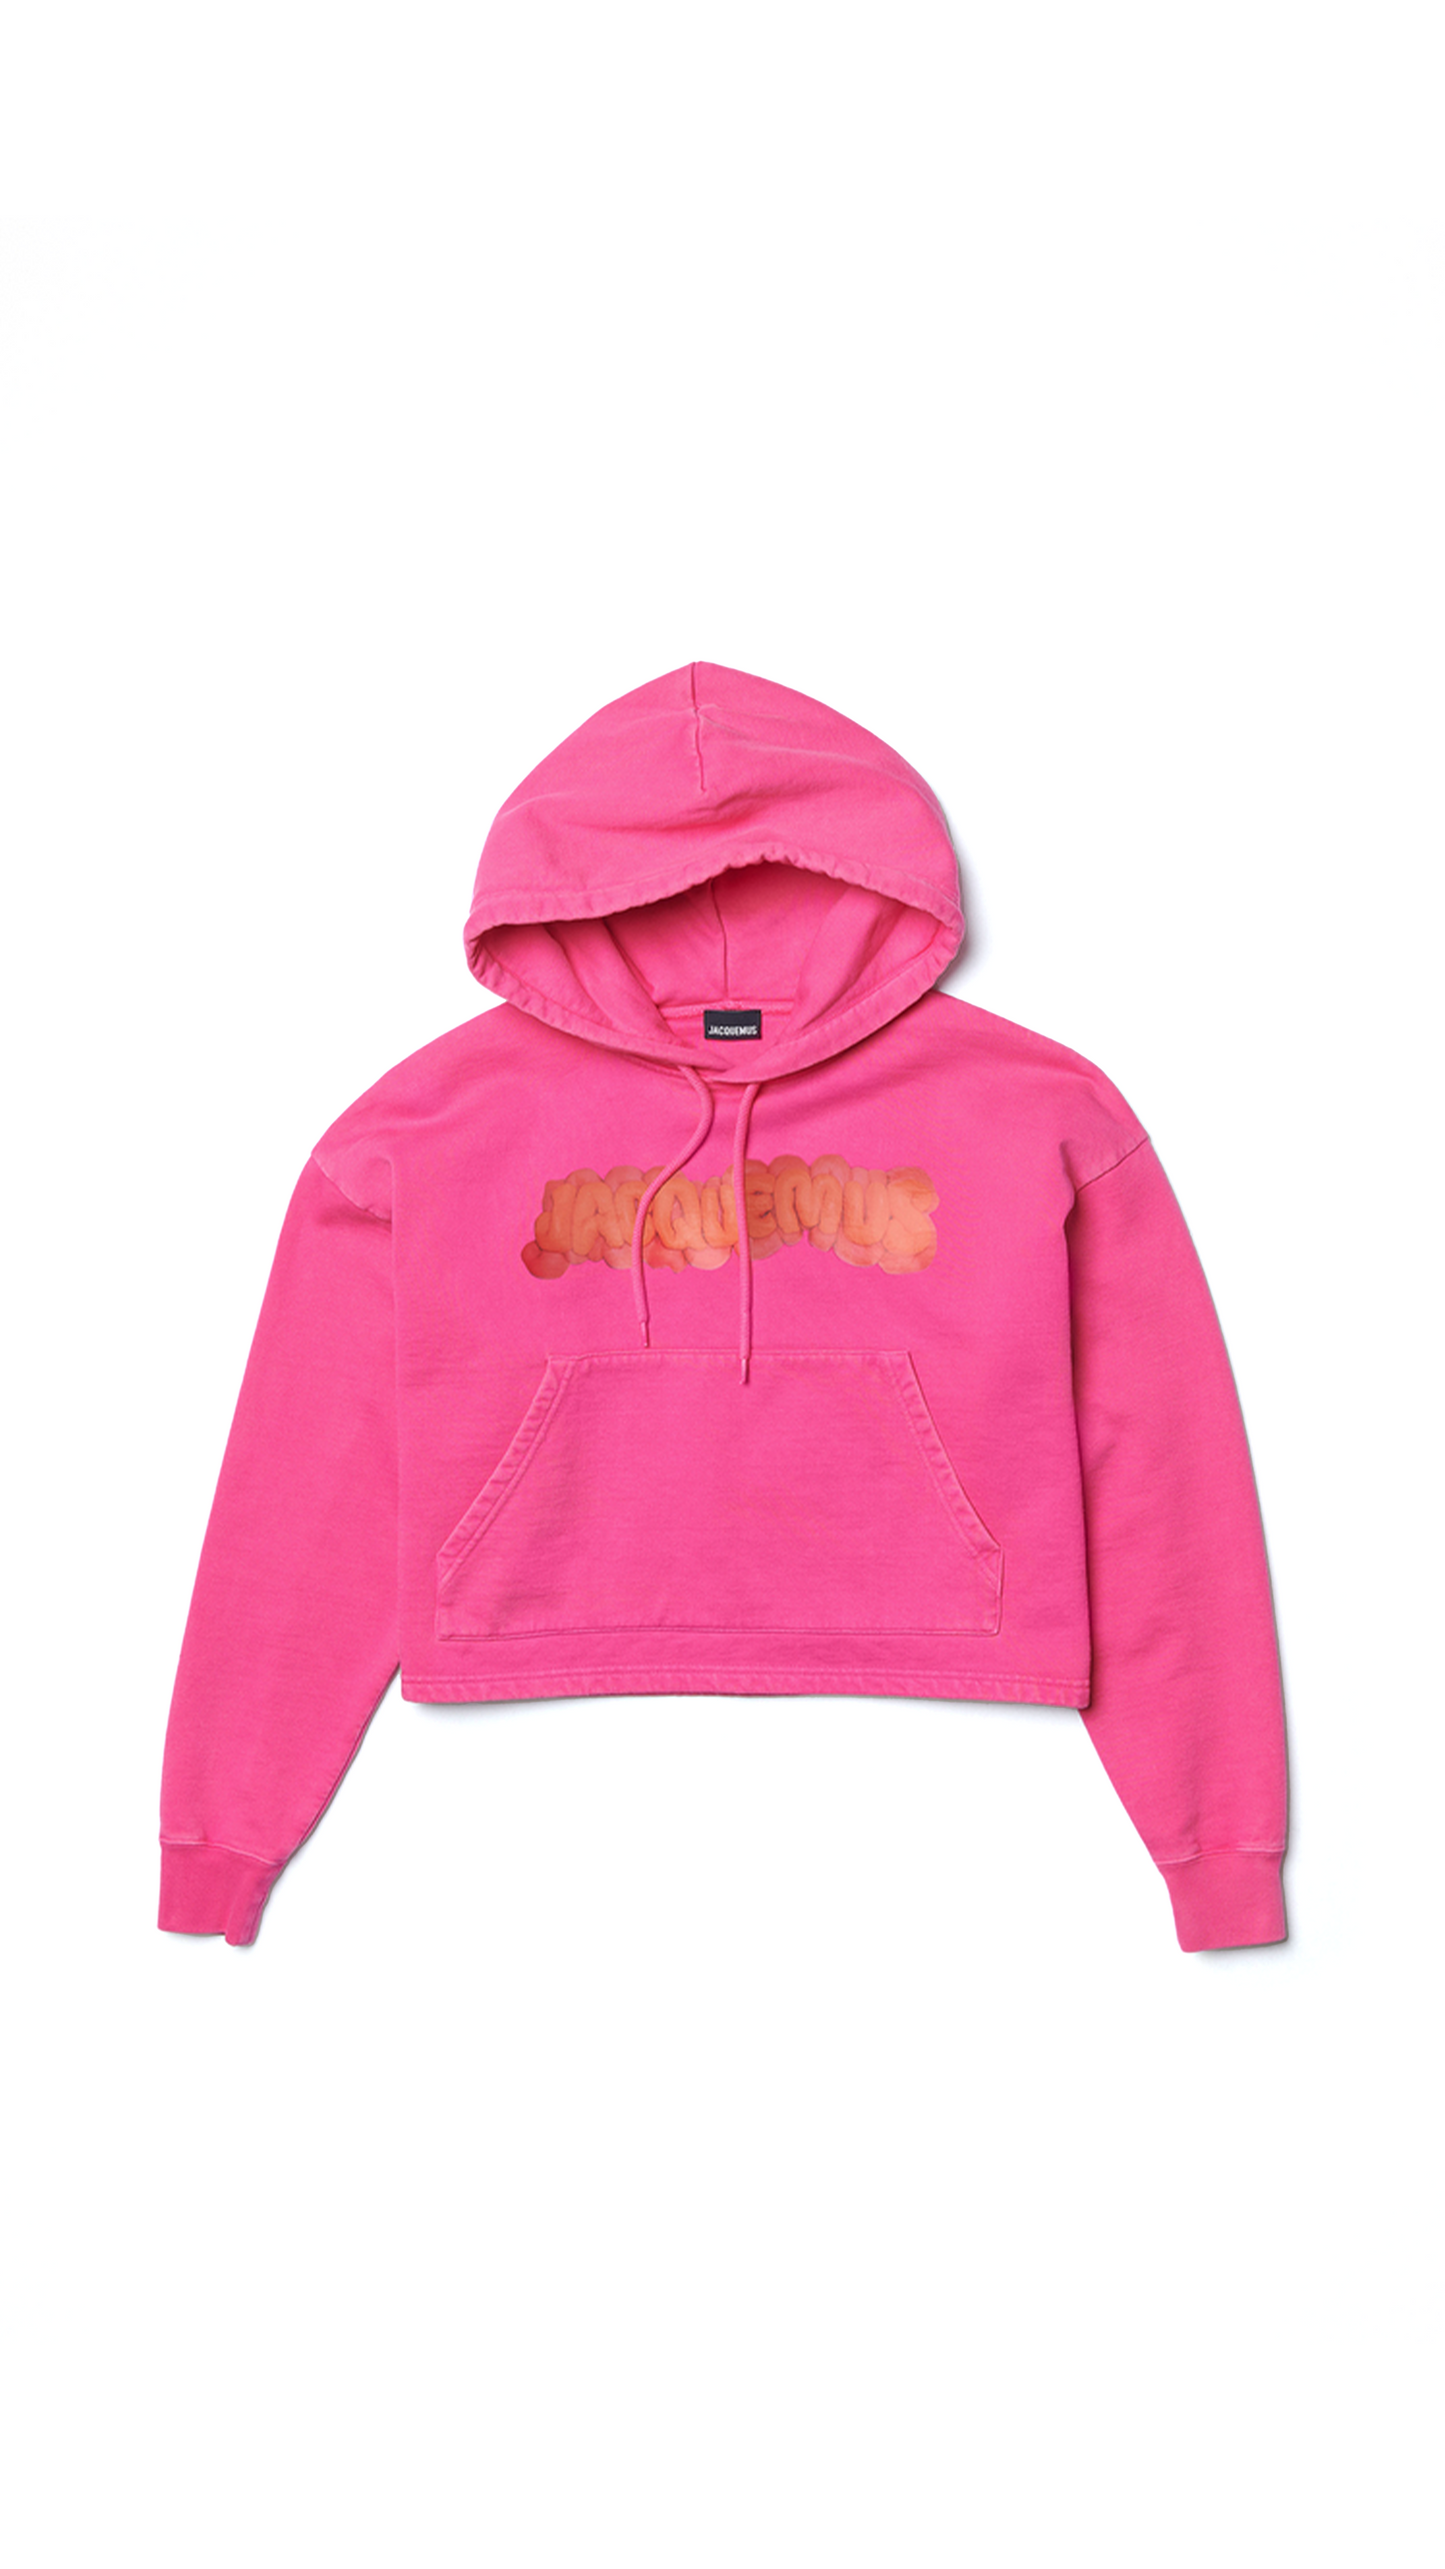 Le Sweatshirt Pate à Modeler - Pink